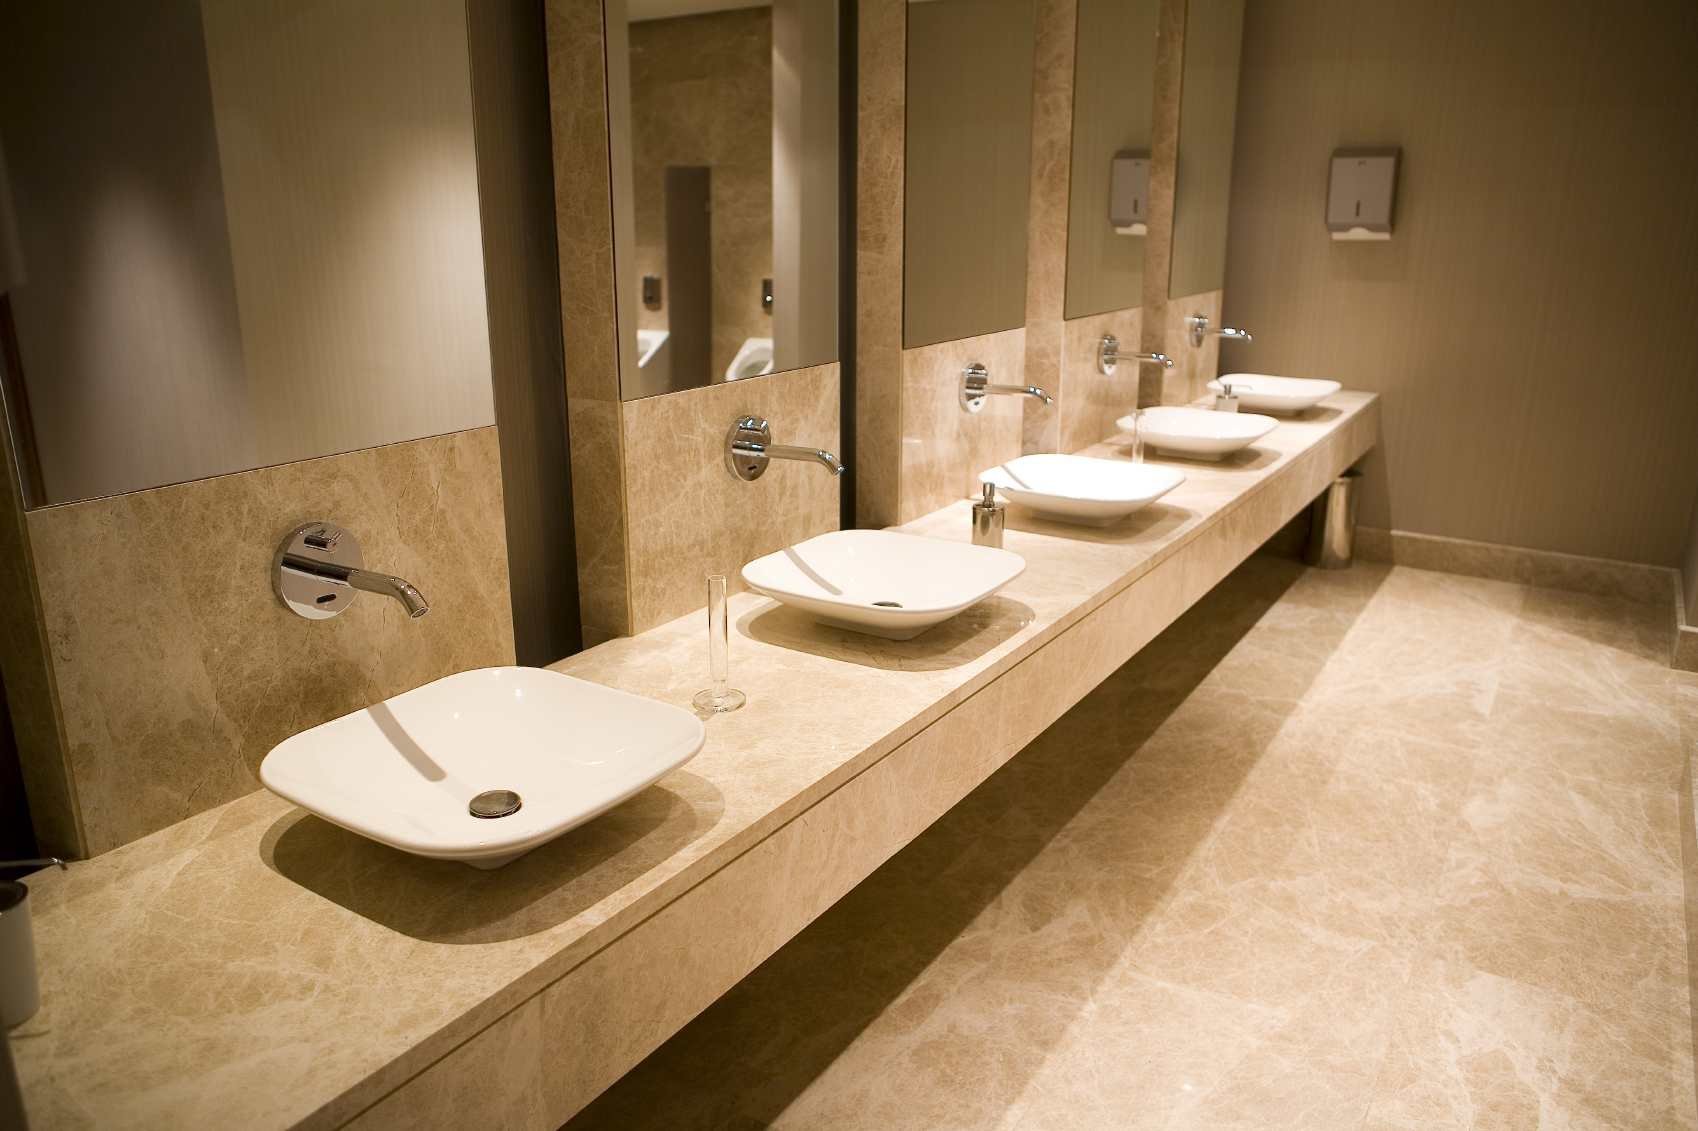 luxurious bathroom ideas http://i01.i.aliimg.com/photo/v0/106998803/public_bathroom.